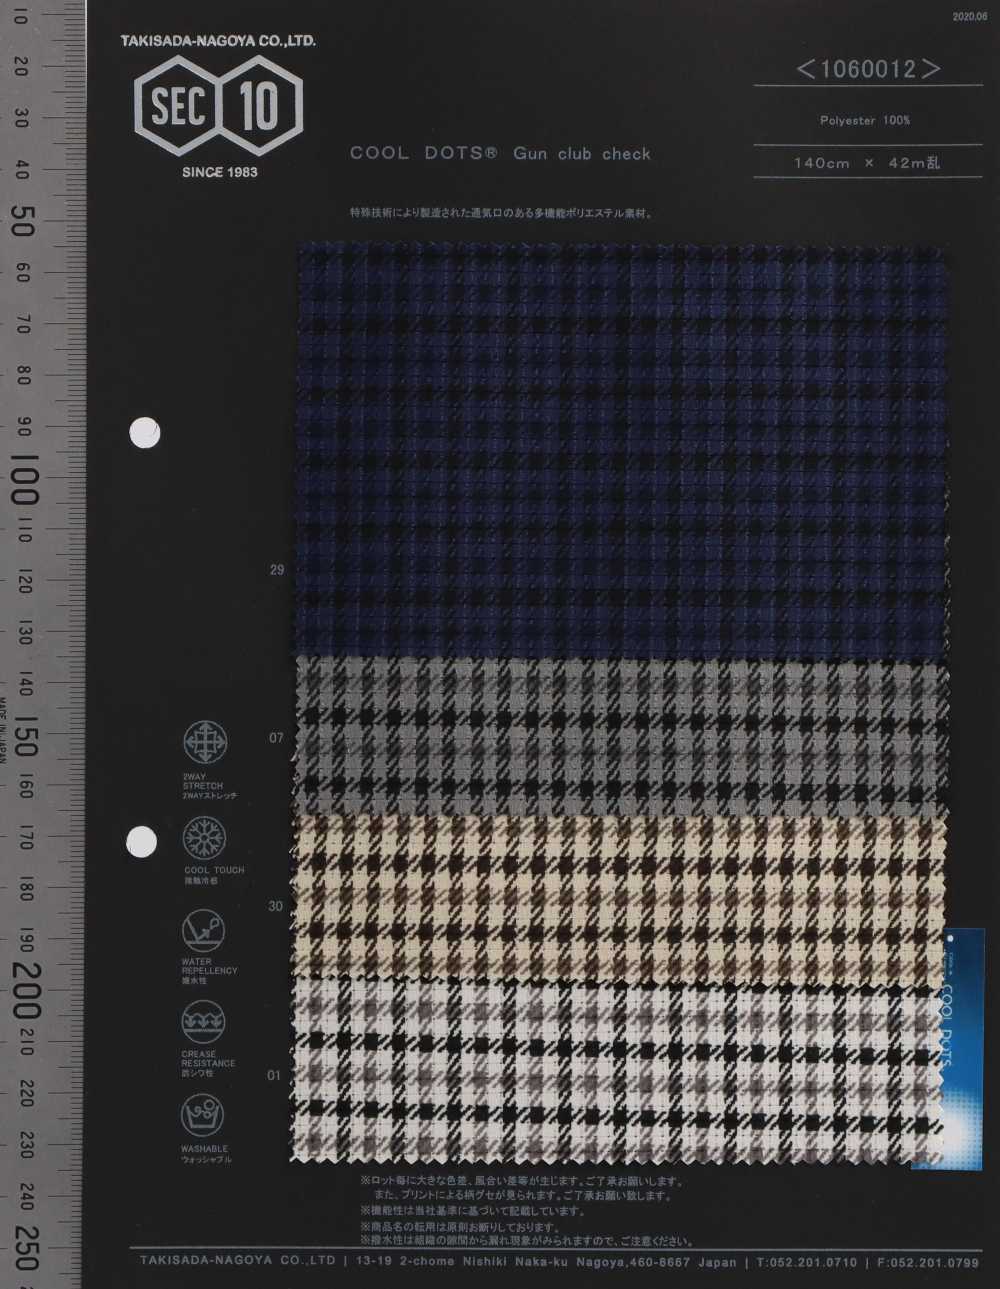 1060012 Impression Du Club De Tir COOLDOTS[Fabrication De Textile] Takisada Nagoya